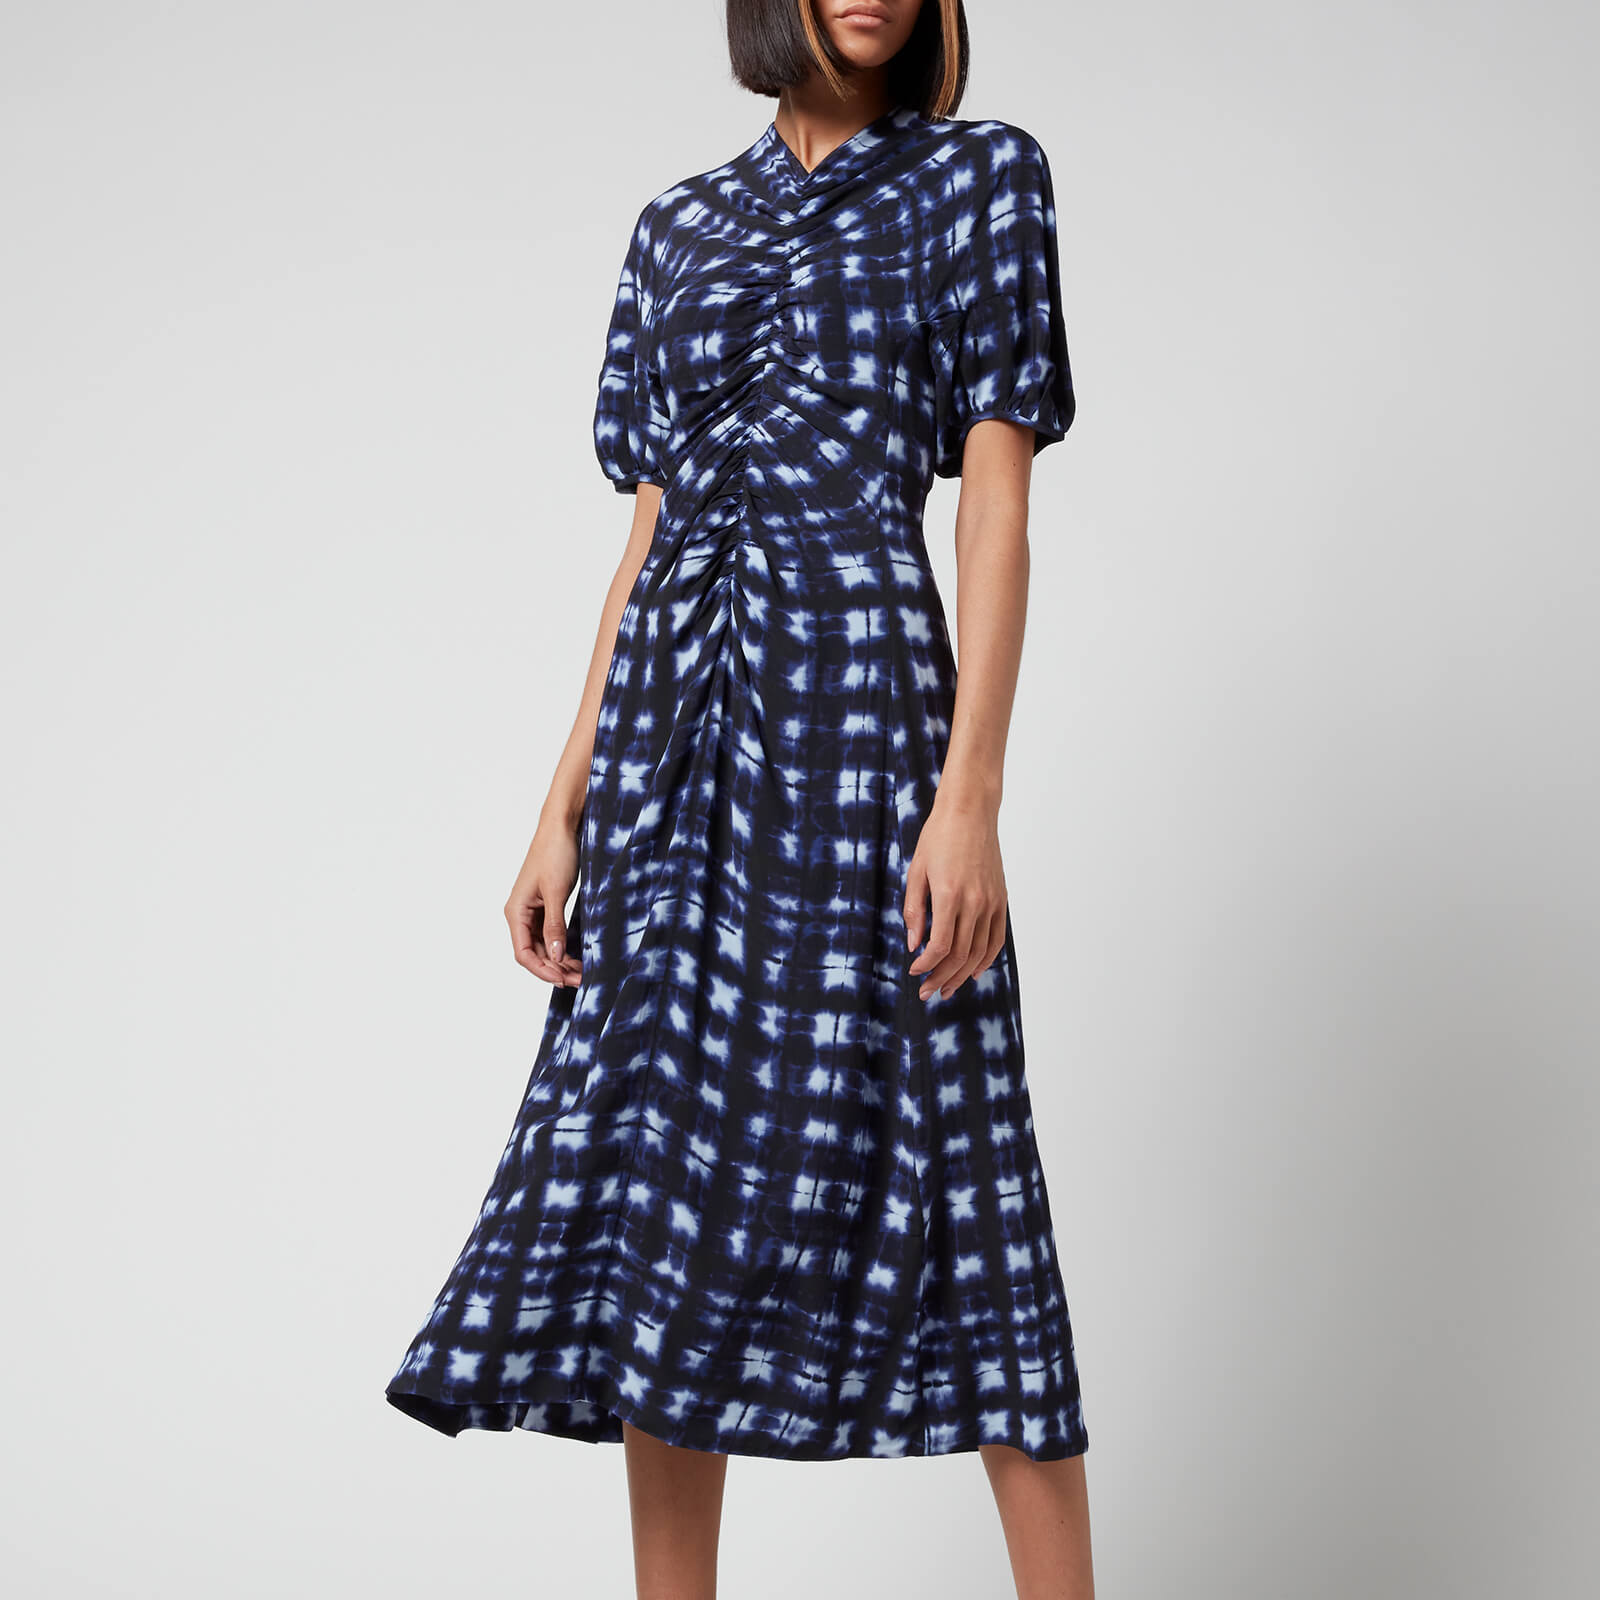 Proenza Schouler Women's Printed Tie Dye Cinched Dress - Blue Multi - US 6/UK 10